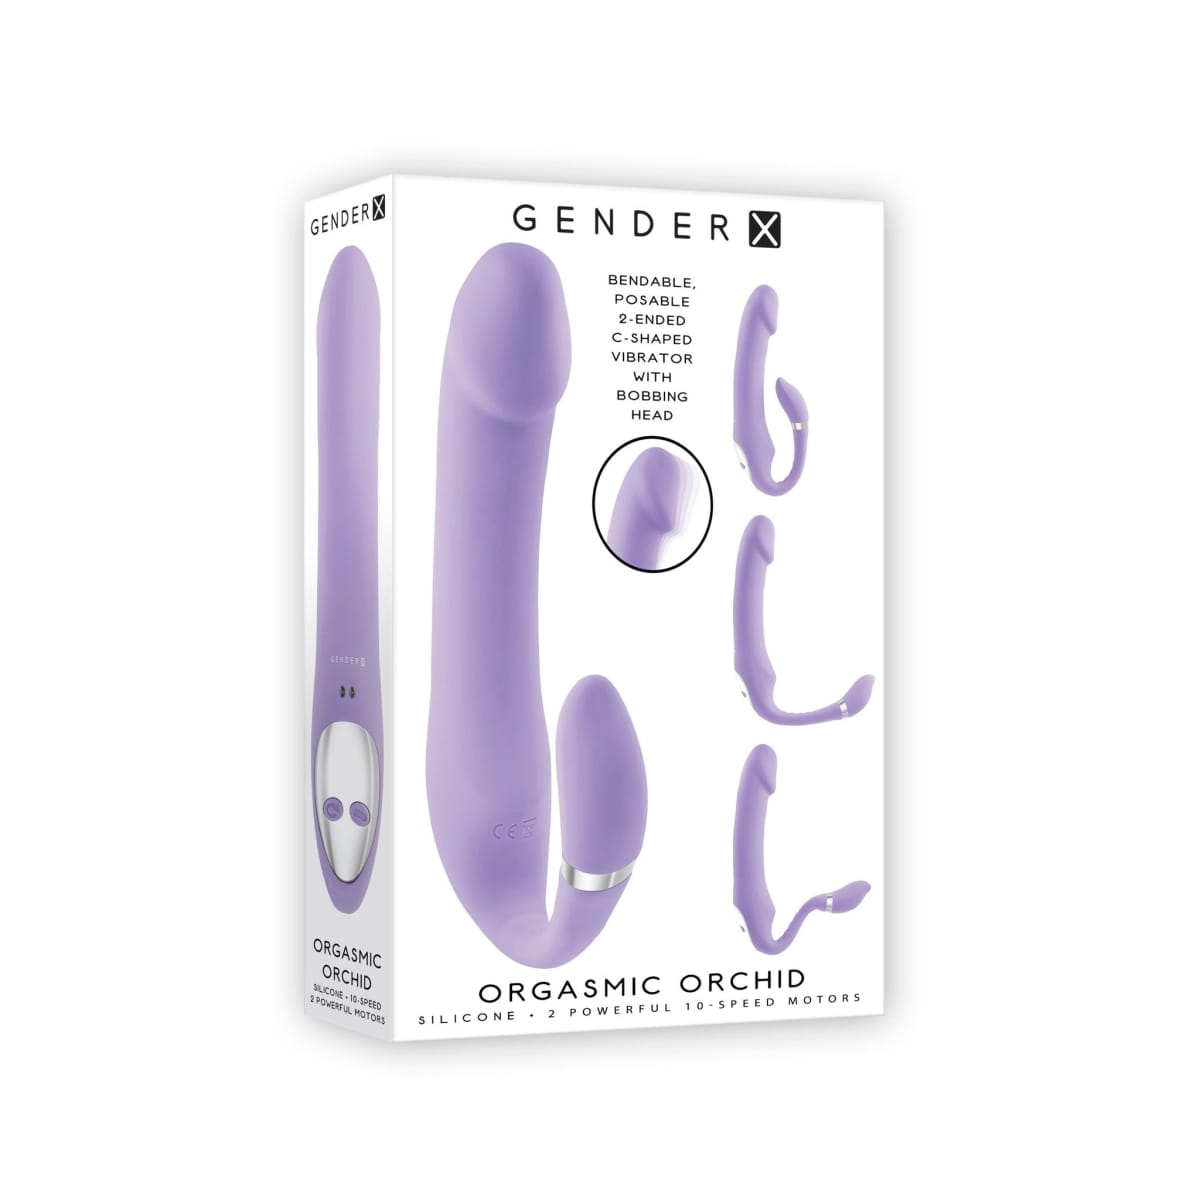 Gender X Orgasmic Orchid – Intimates Adult Boutique Intimates Adult Boutique